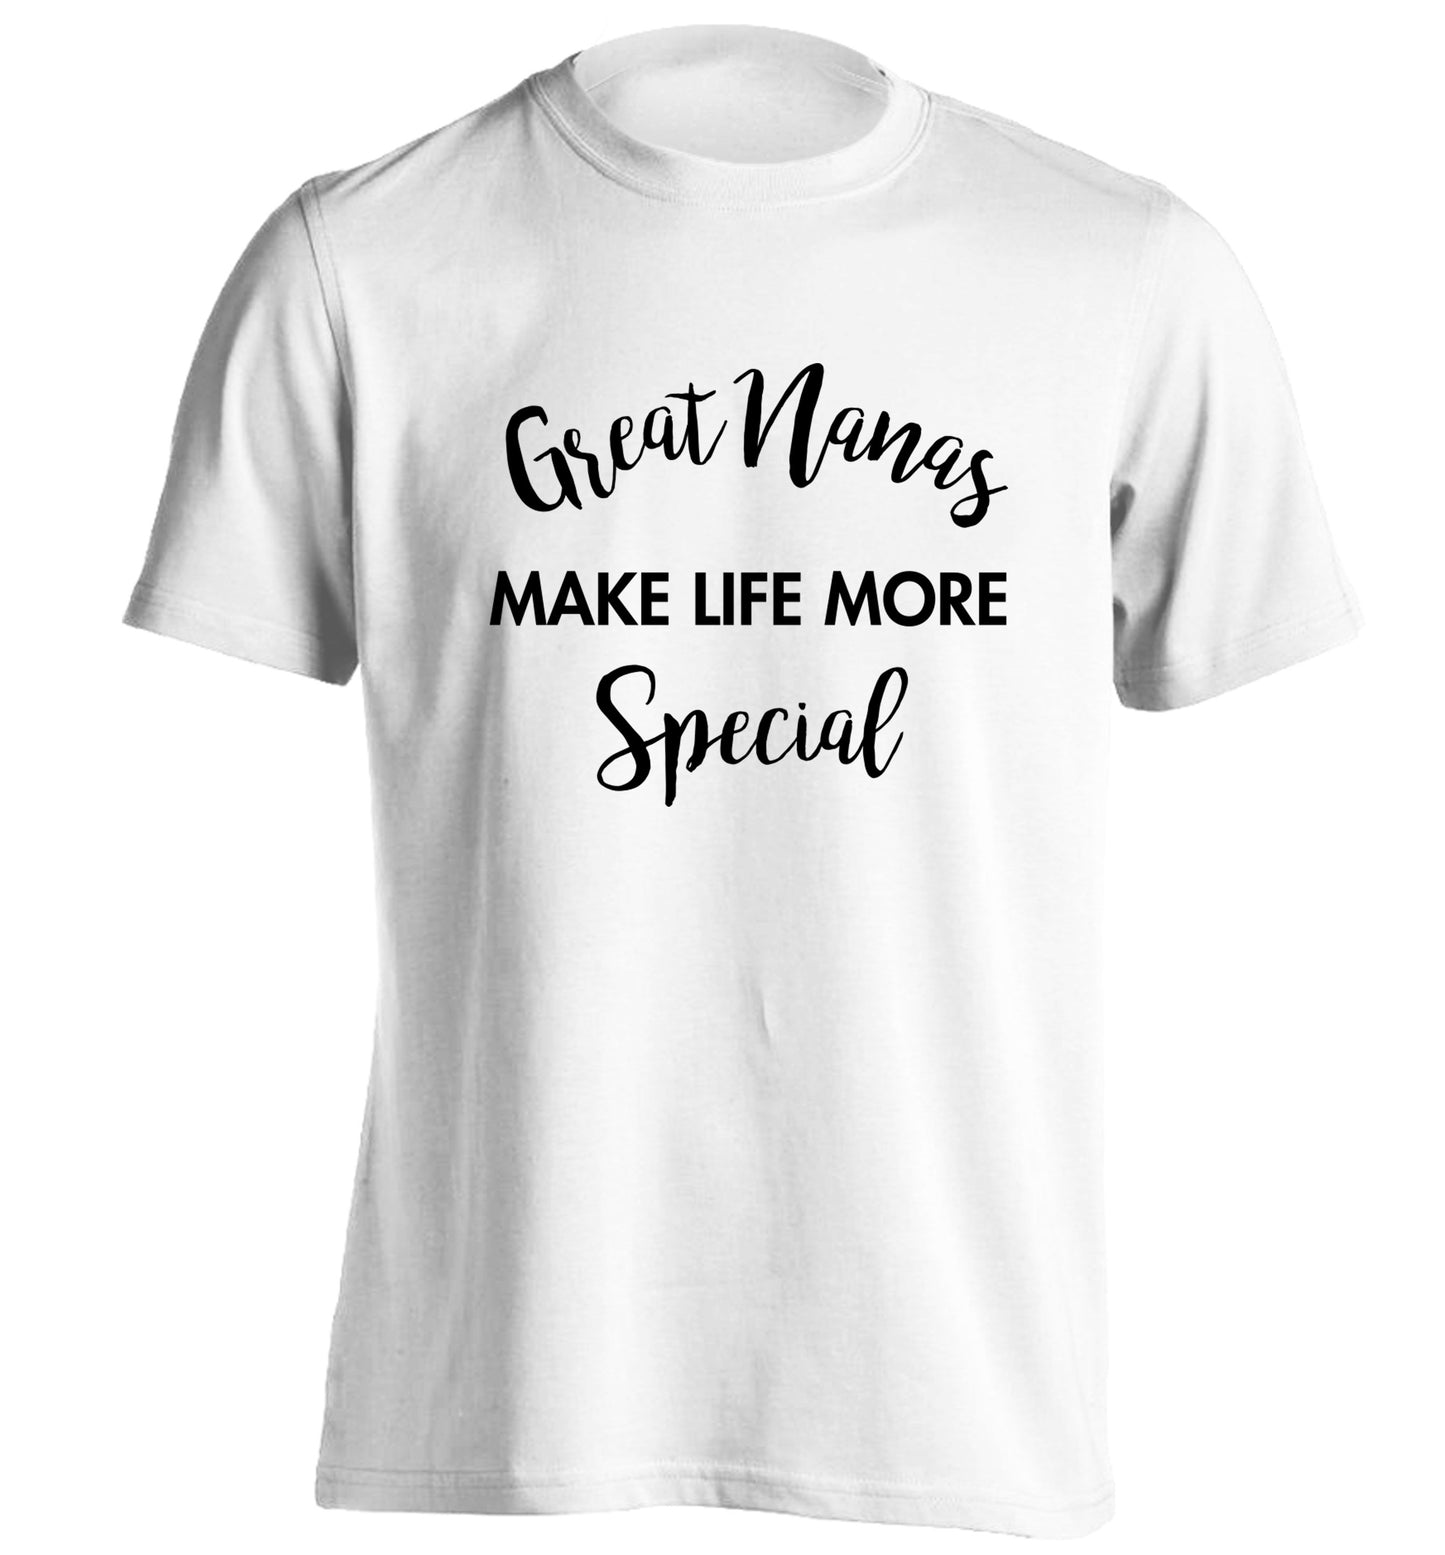 Great nanas make life more special adults unisex white Tshirt 2XL